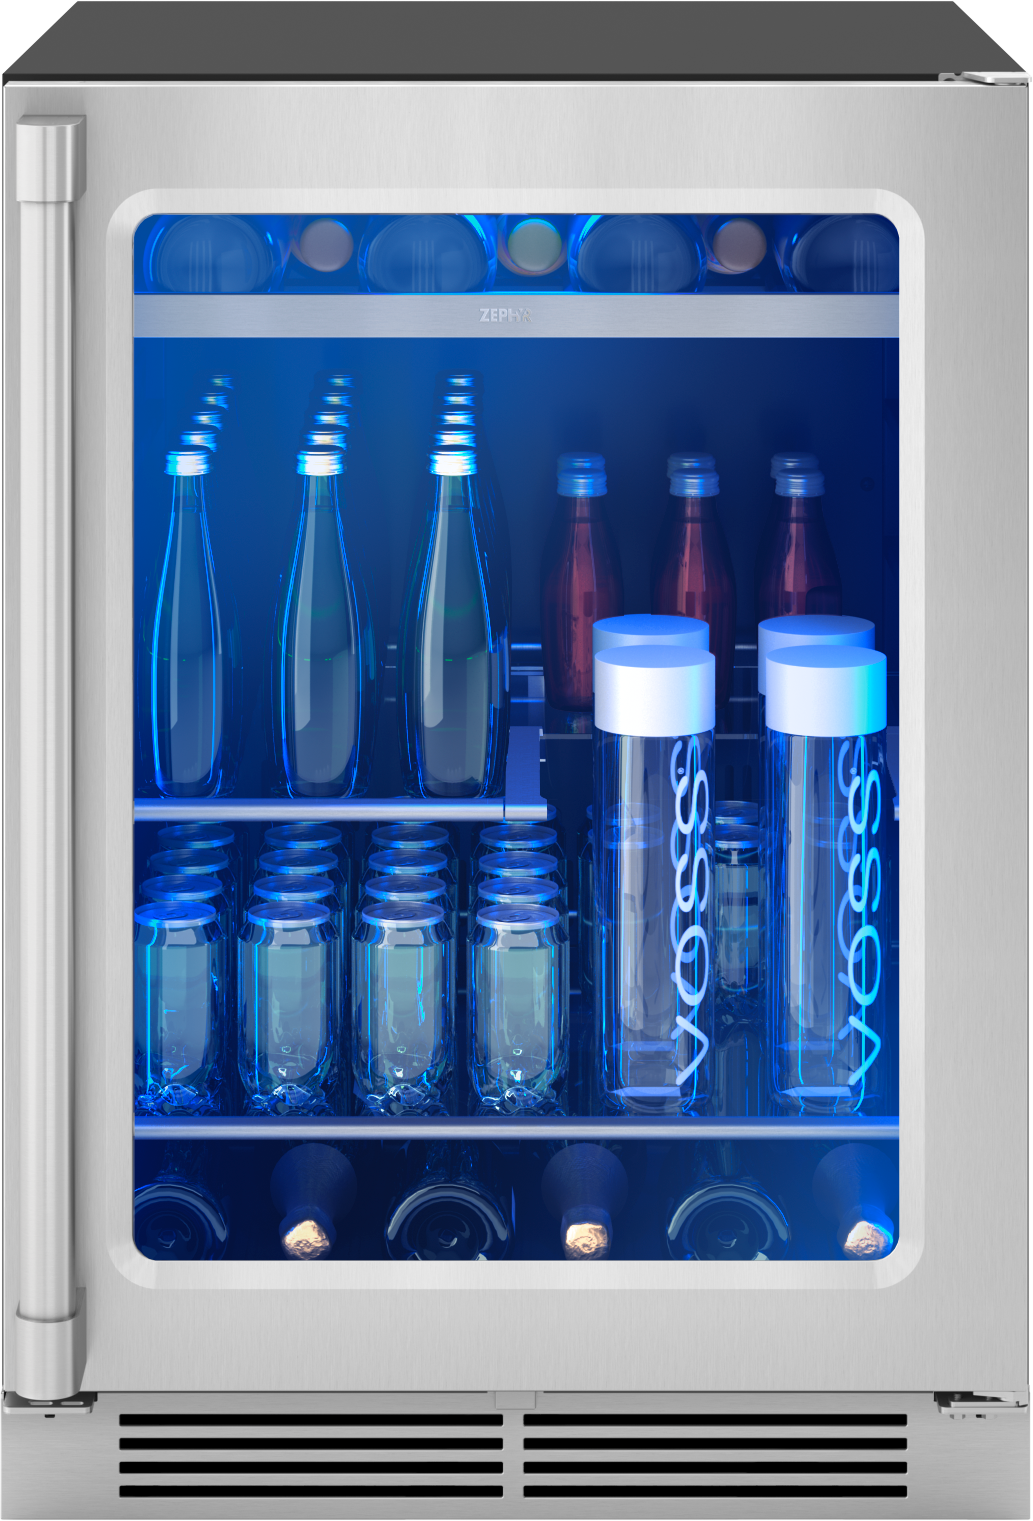 Beverage Cooler And Fridge with Glass Door,30 Can Beverage Mini Fridge,  Adjustable Shelves Dispenser Countertop Refrigerator Cellars, Perfect for  Soda